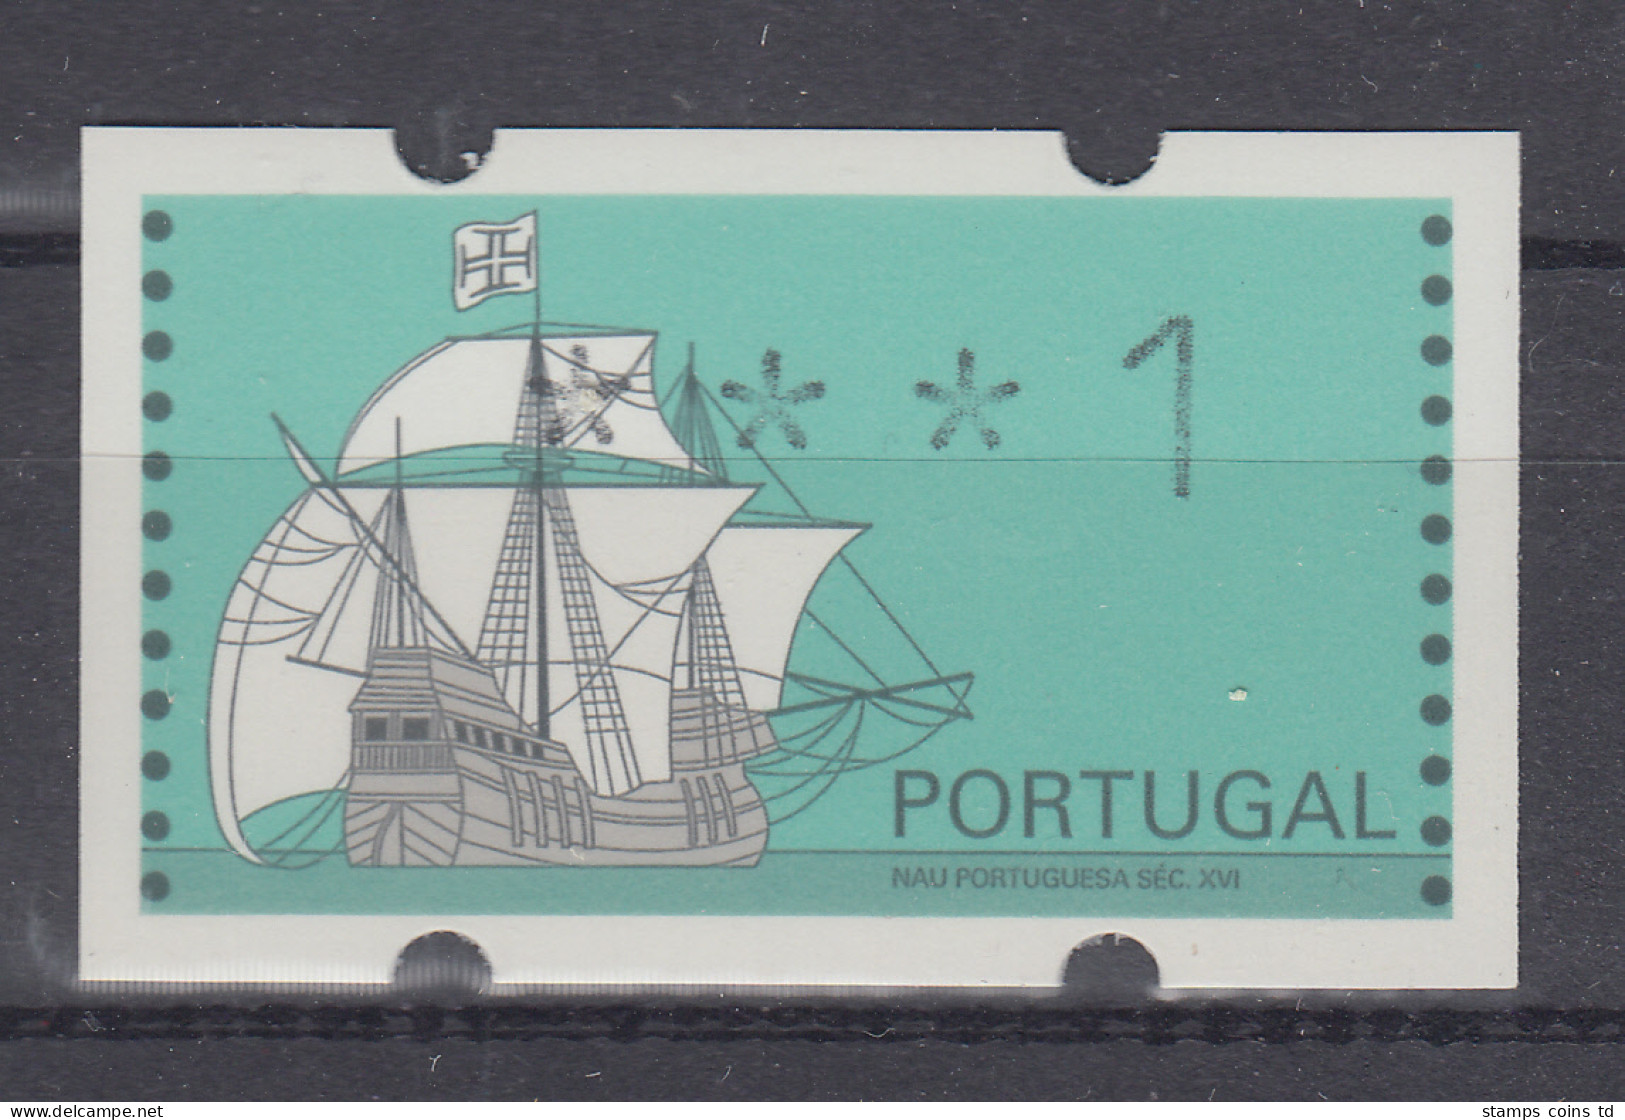 Portugal Klüssendorf ATM Segelschiff Nau ** - Machine Labels [ATM]